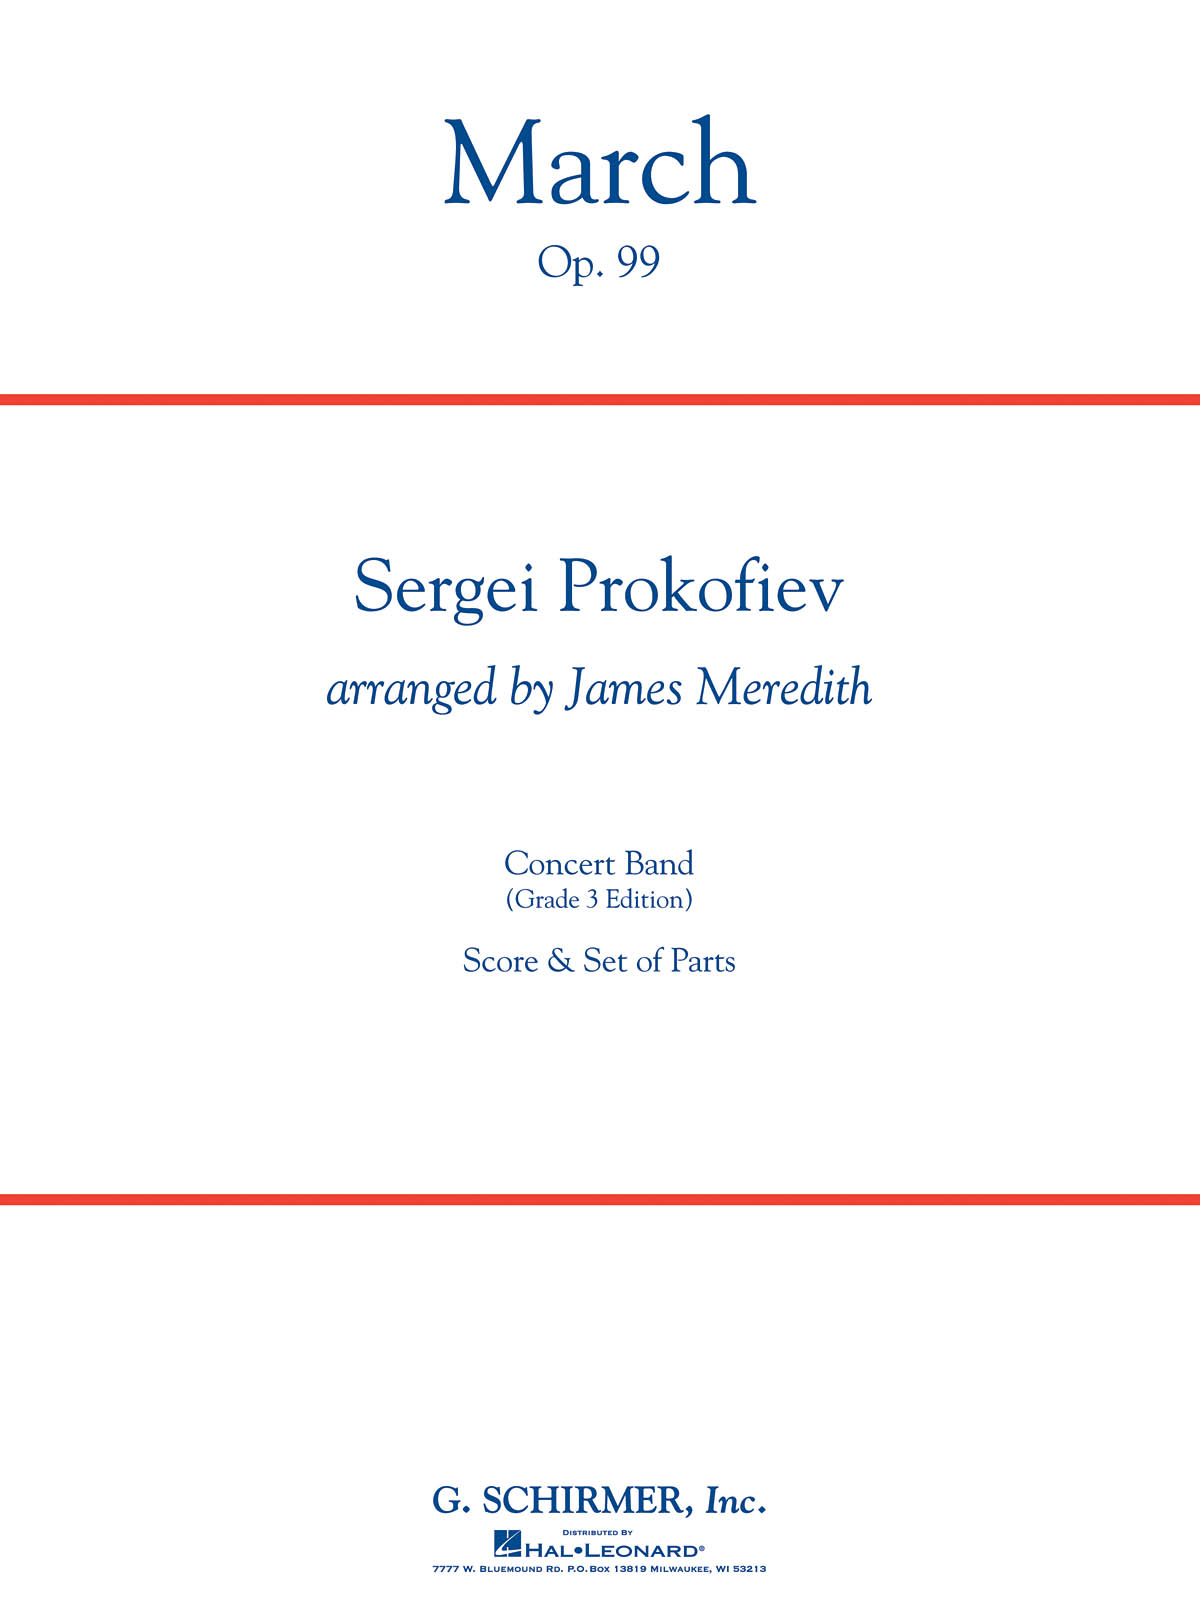 Sergei Prokofiev: March  Op. 99: Concert Band: Score